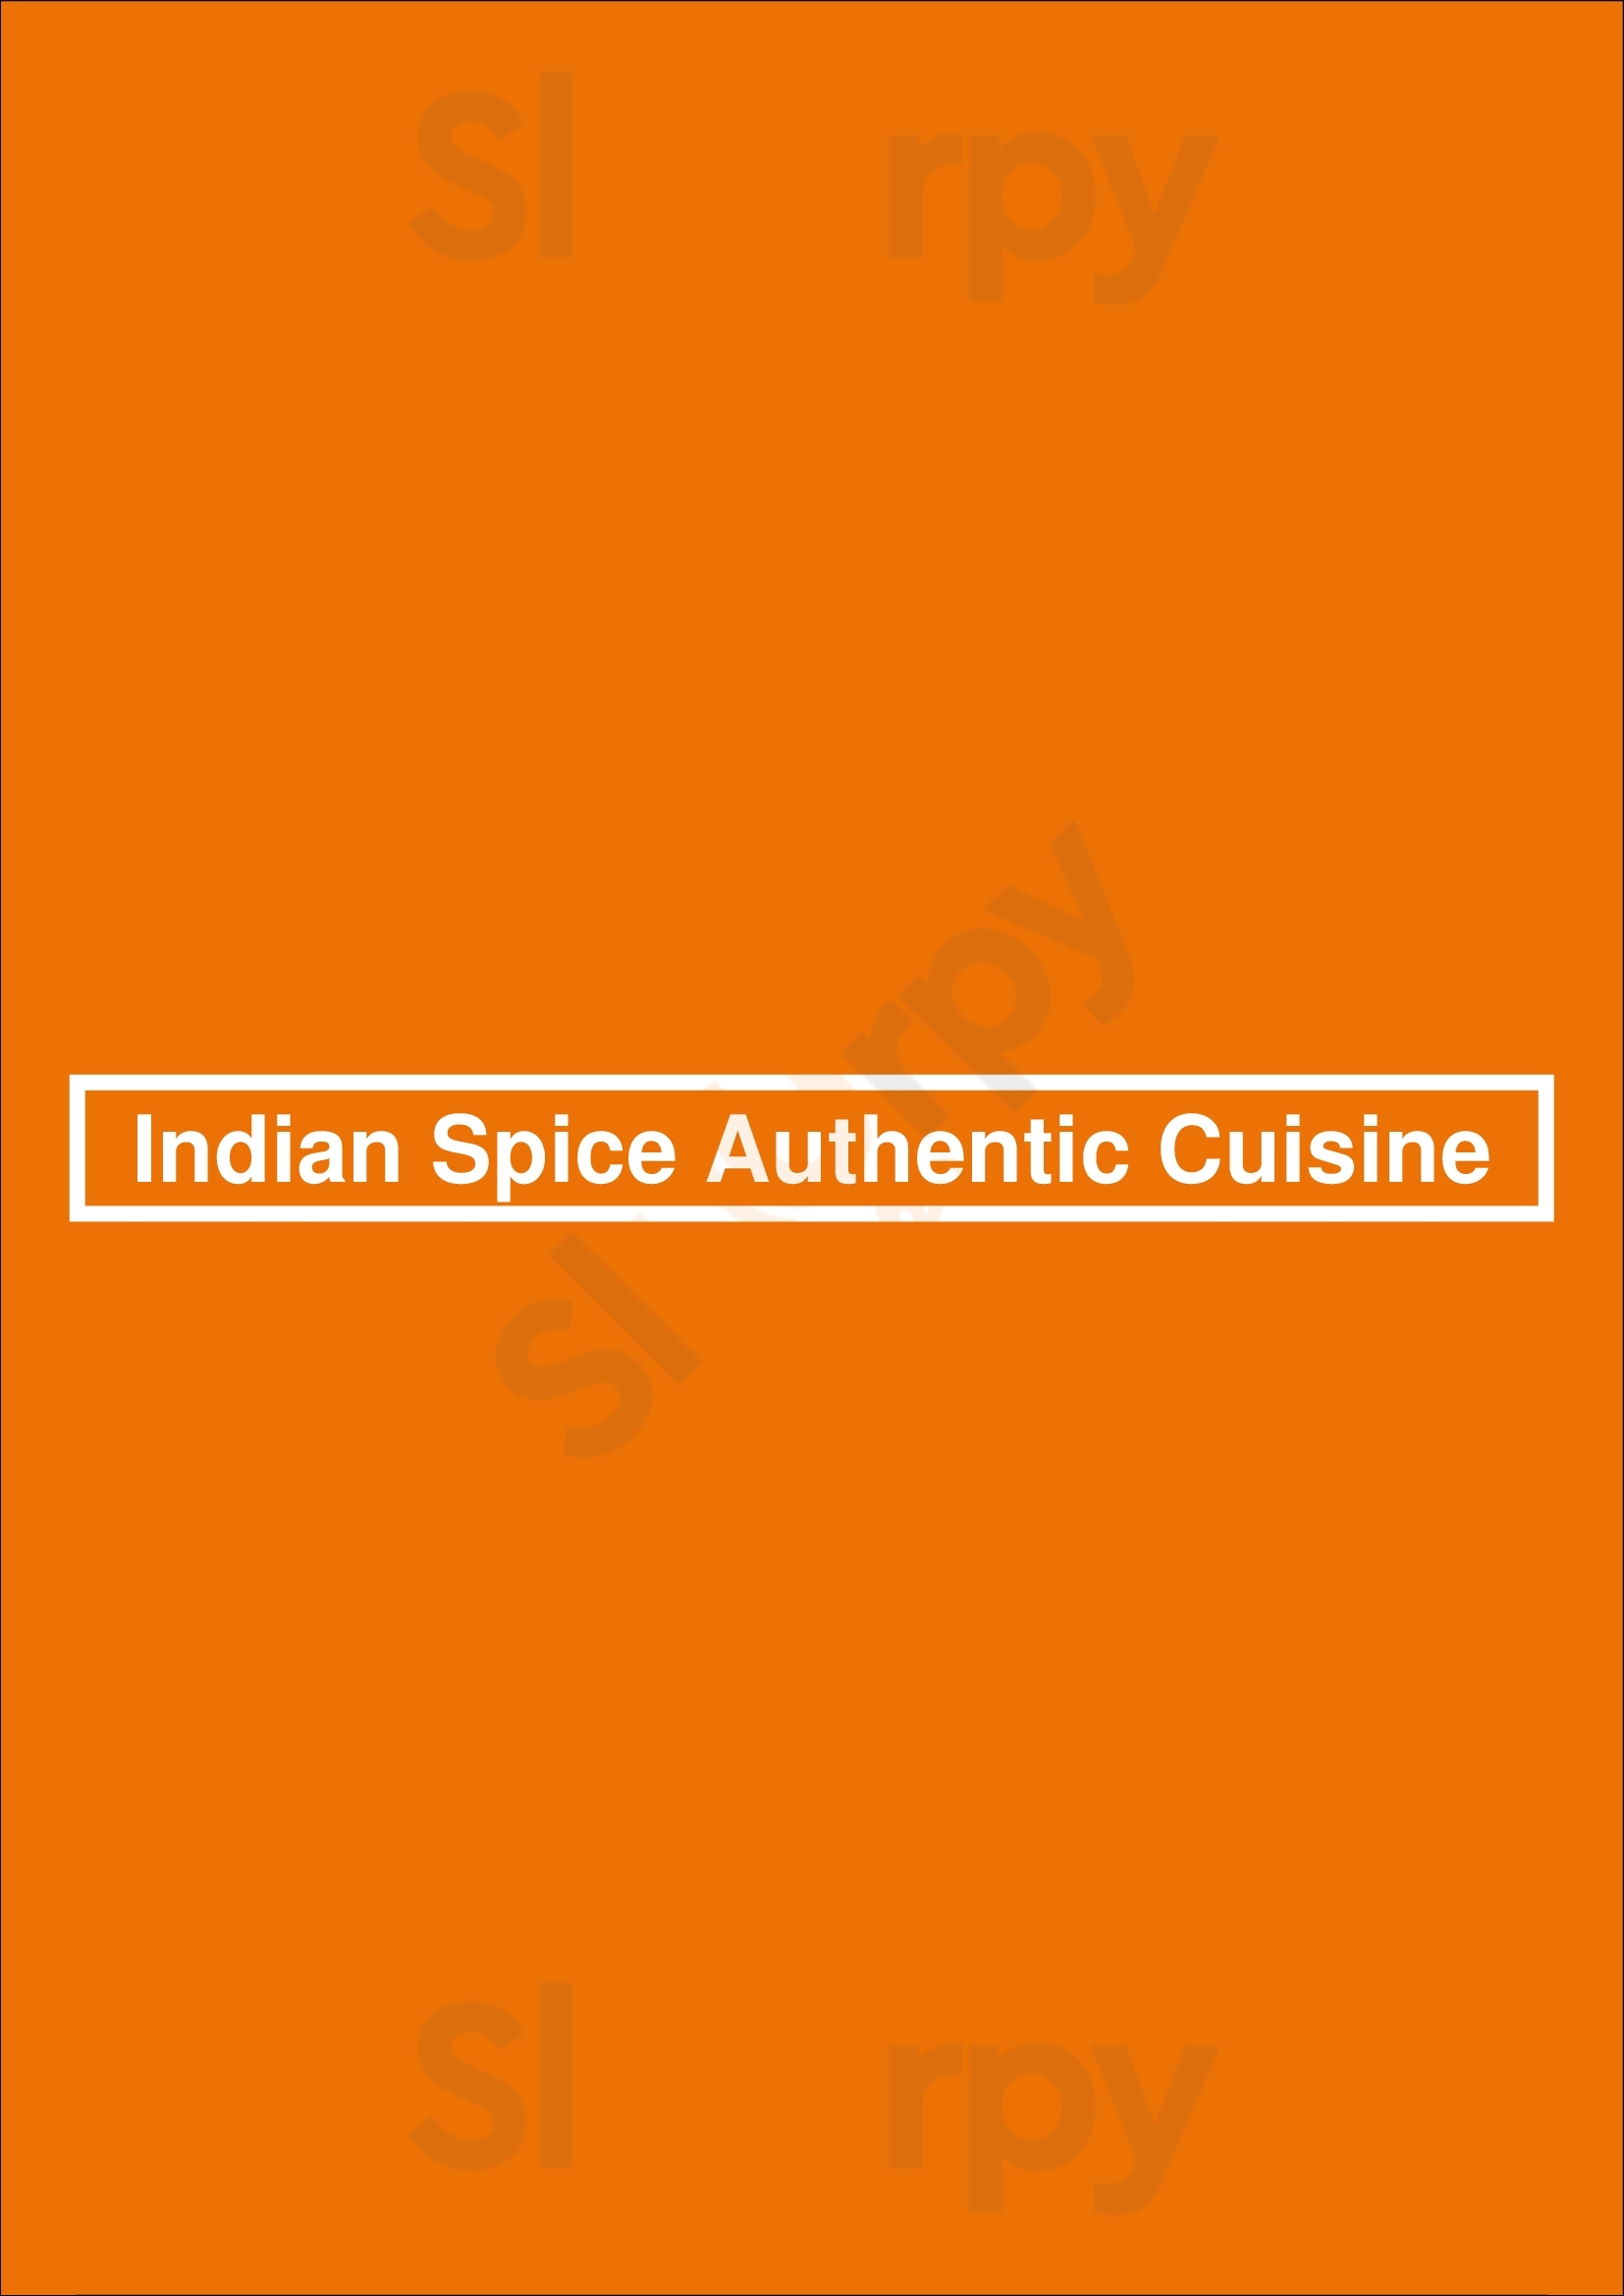 Indian Spice Authentic Cuisine Glenelg Menu - 1